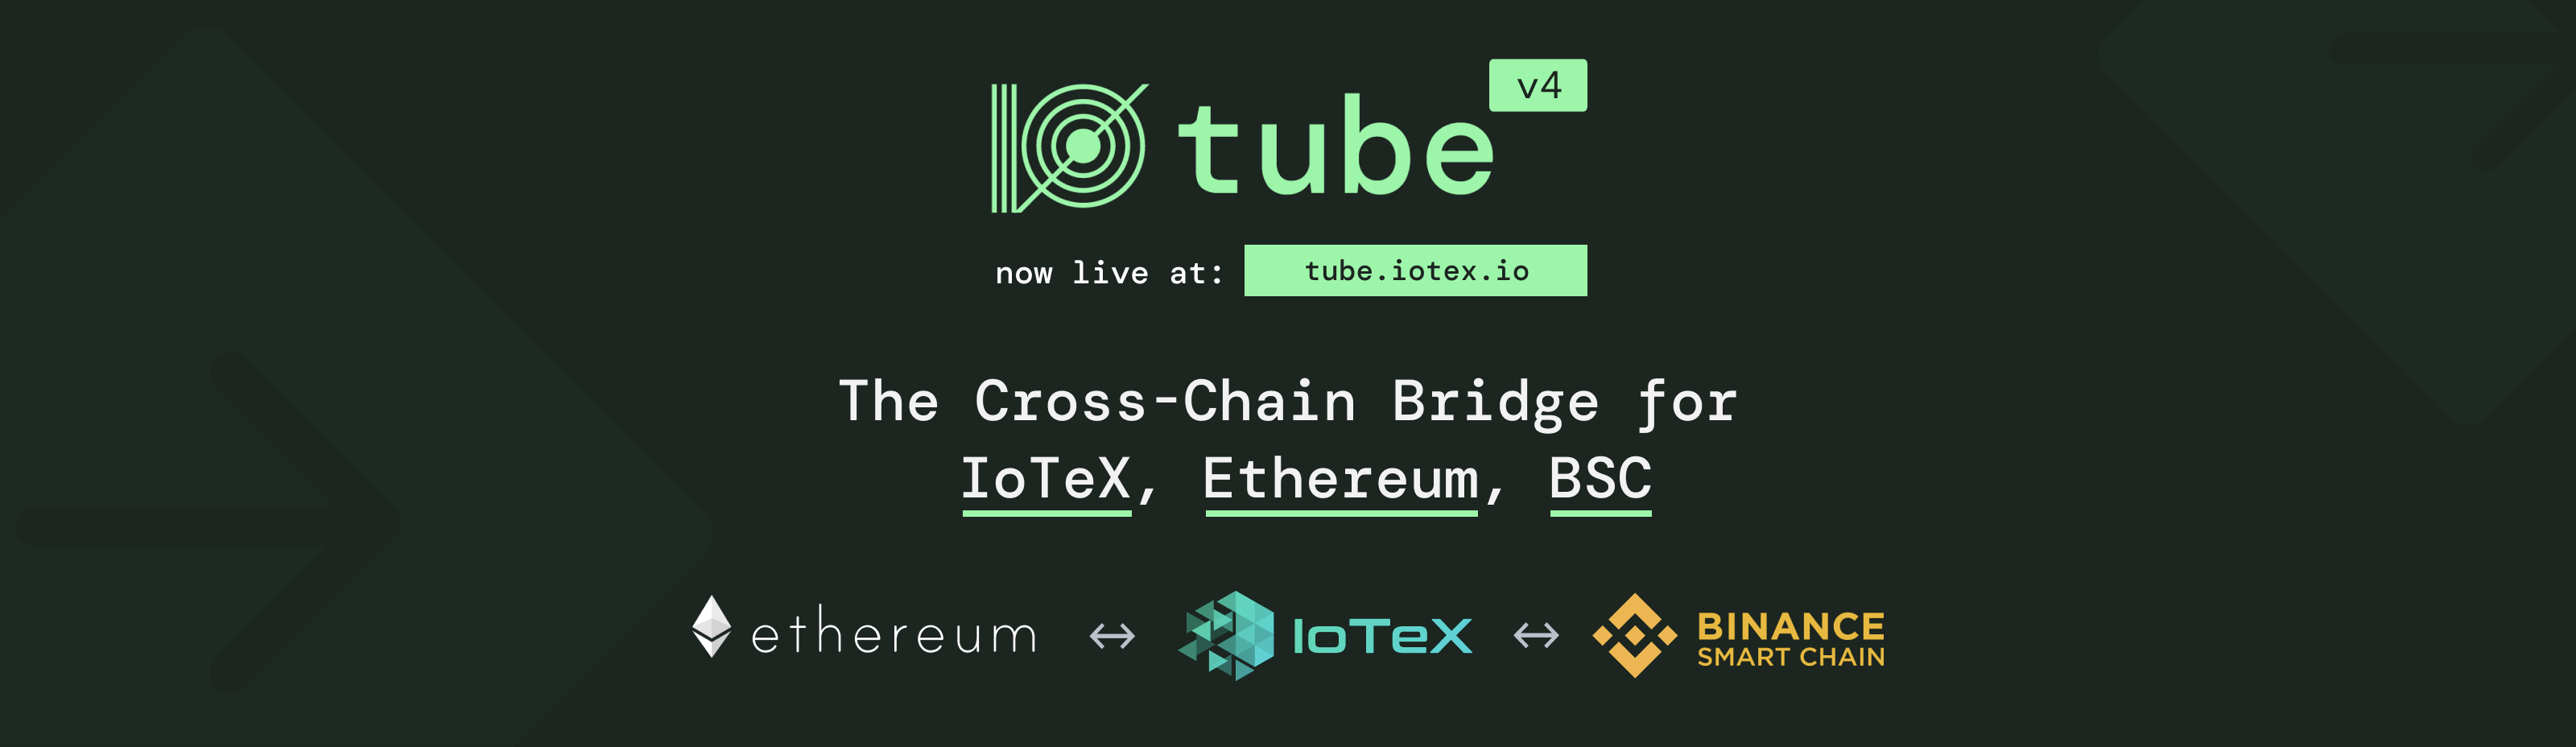 ioTube v4 — Cross-Chain Bridge for IoTeX, Ethereum, and Binance Smart Chain